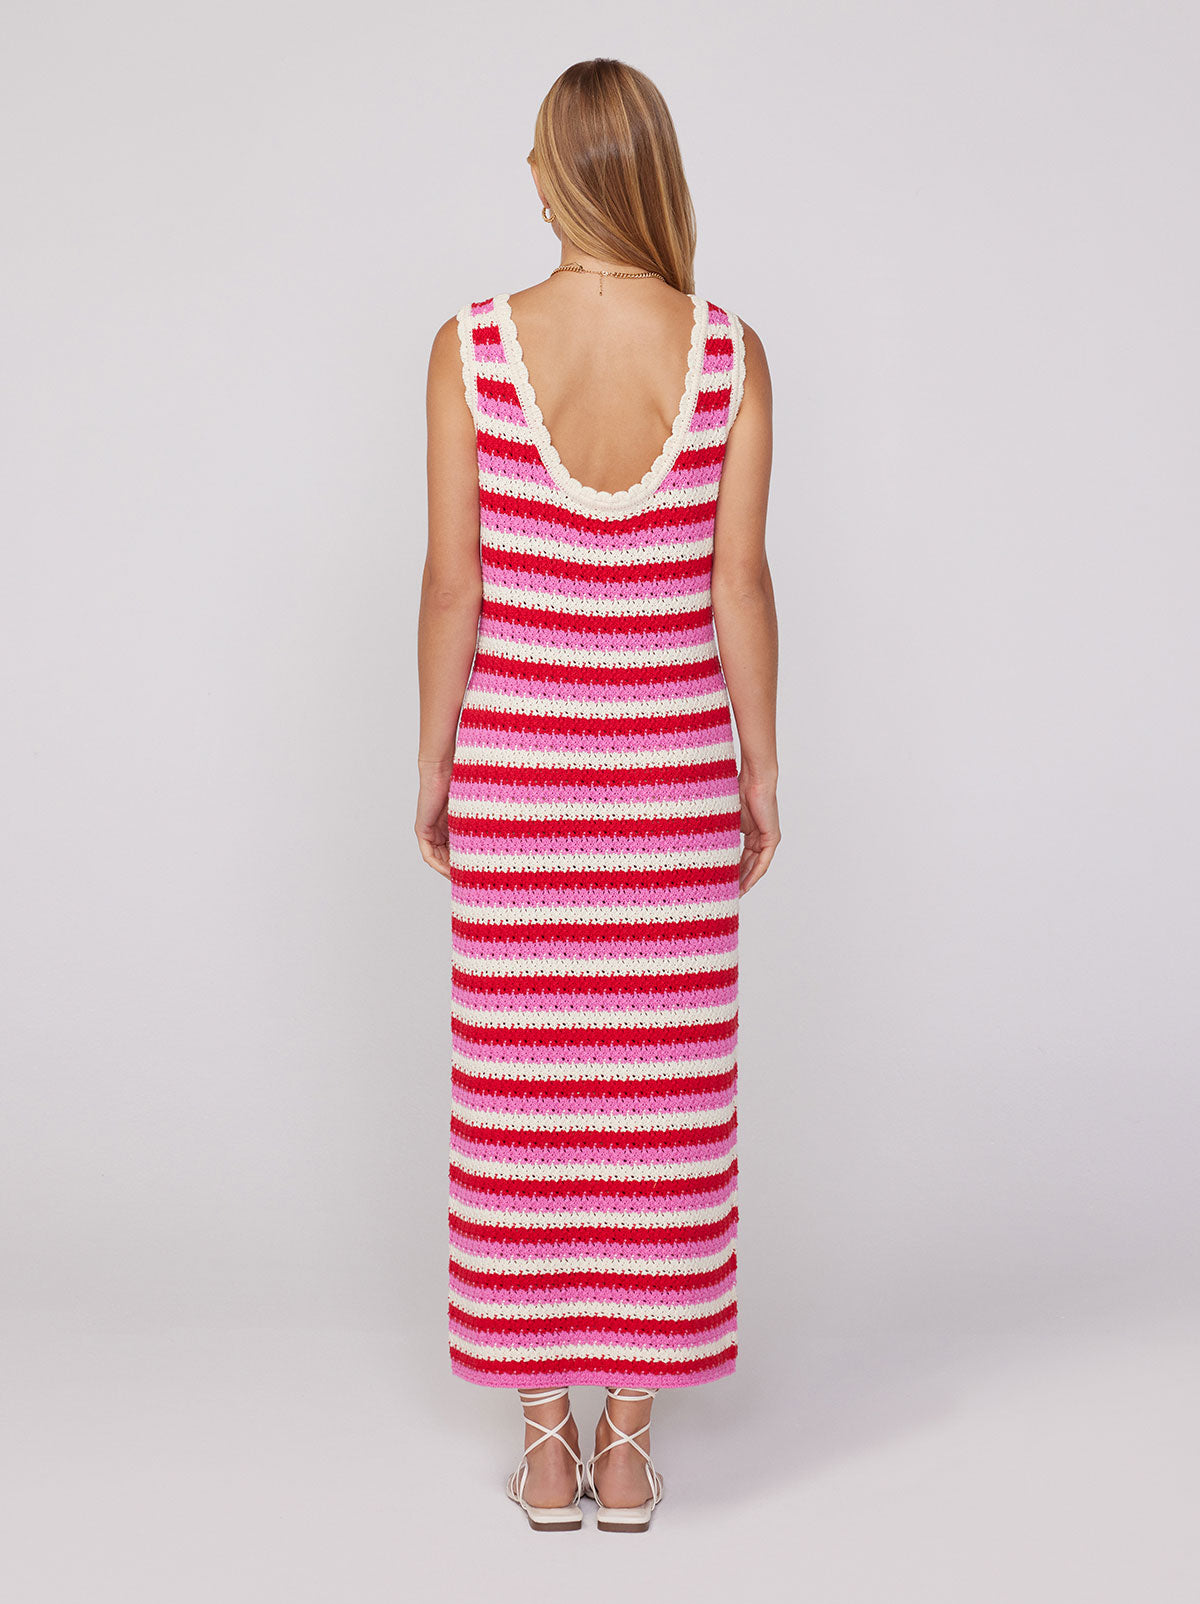 Bunty Pink Stripe Knit Dress by KITRI Studio